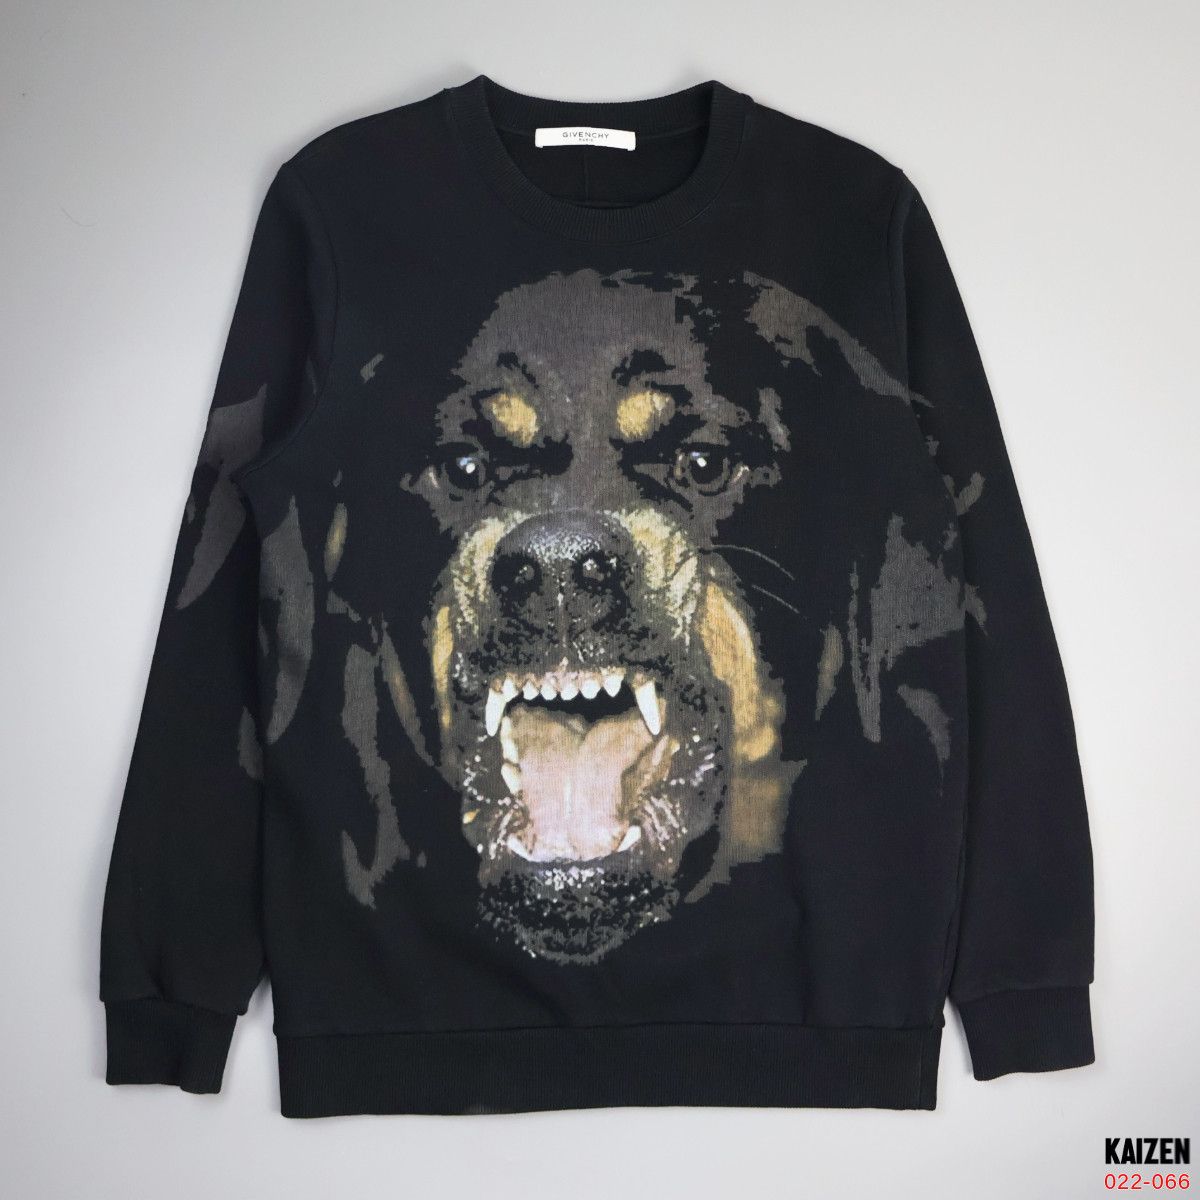 Givenchy Rottweiler Sweatshirt | Grailed